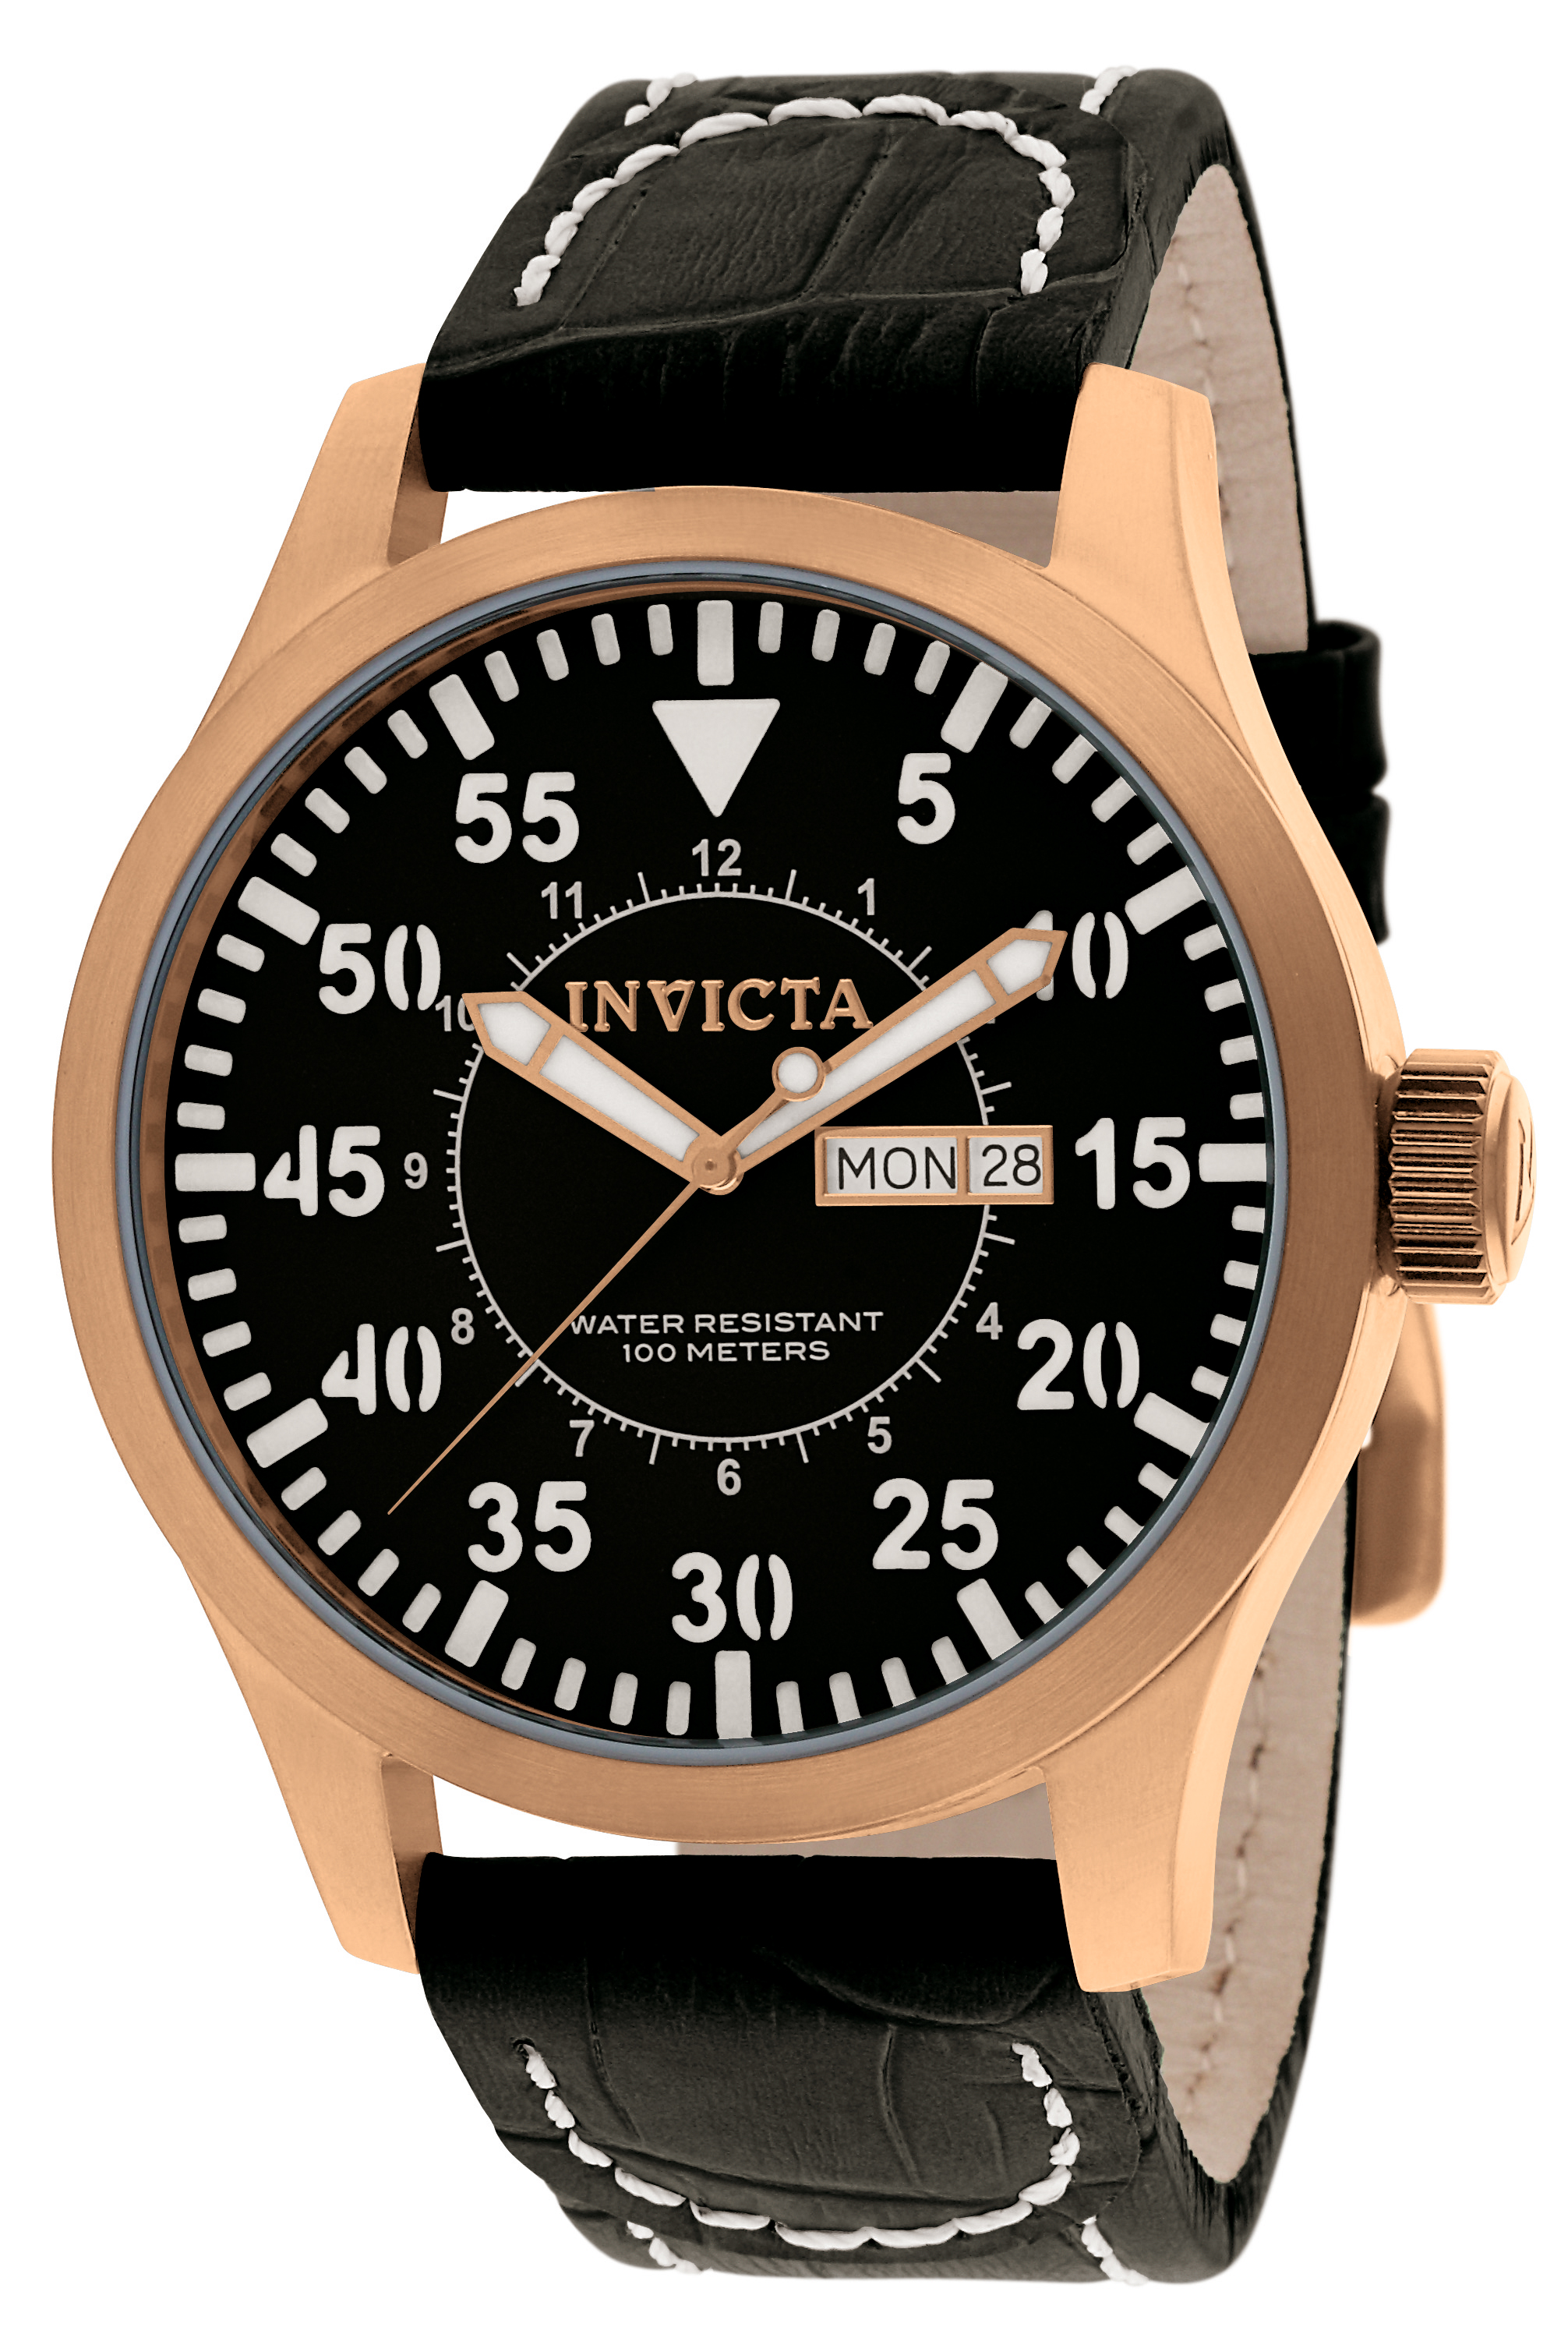 Invicta Specialty Men's Watch - 48mm, Black (11195)